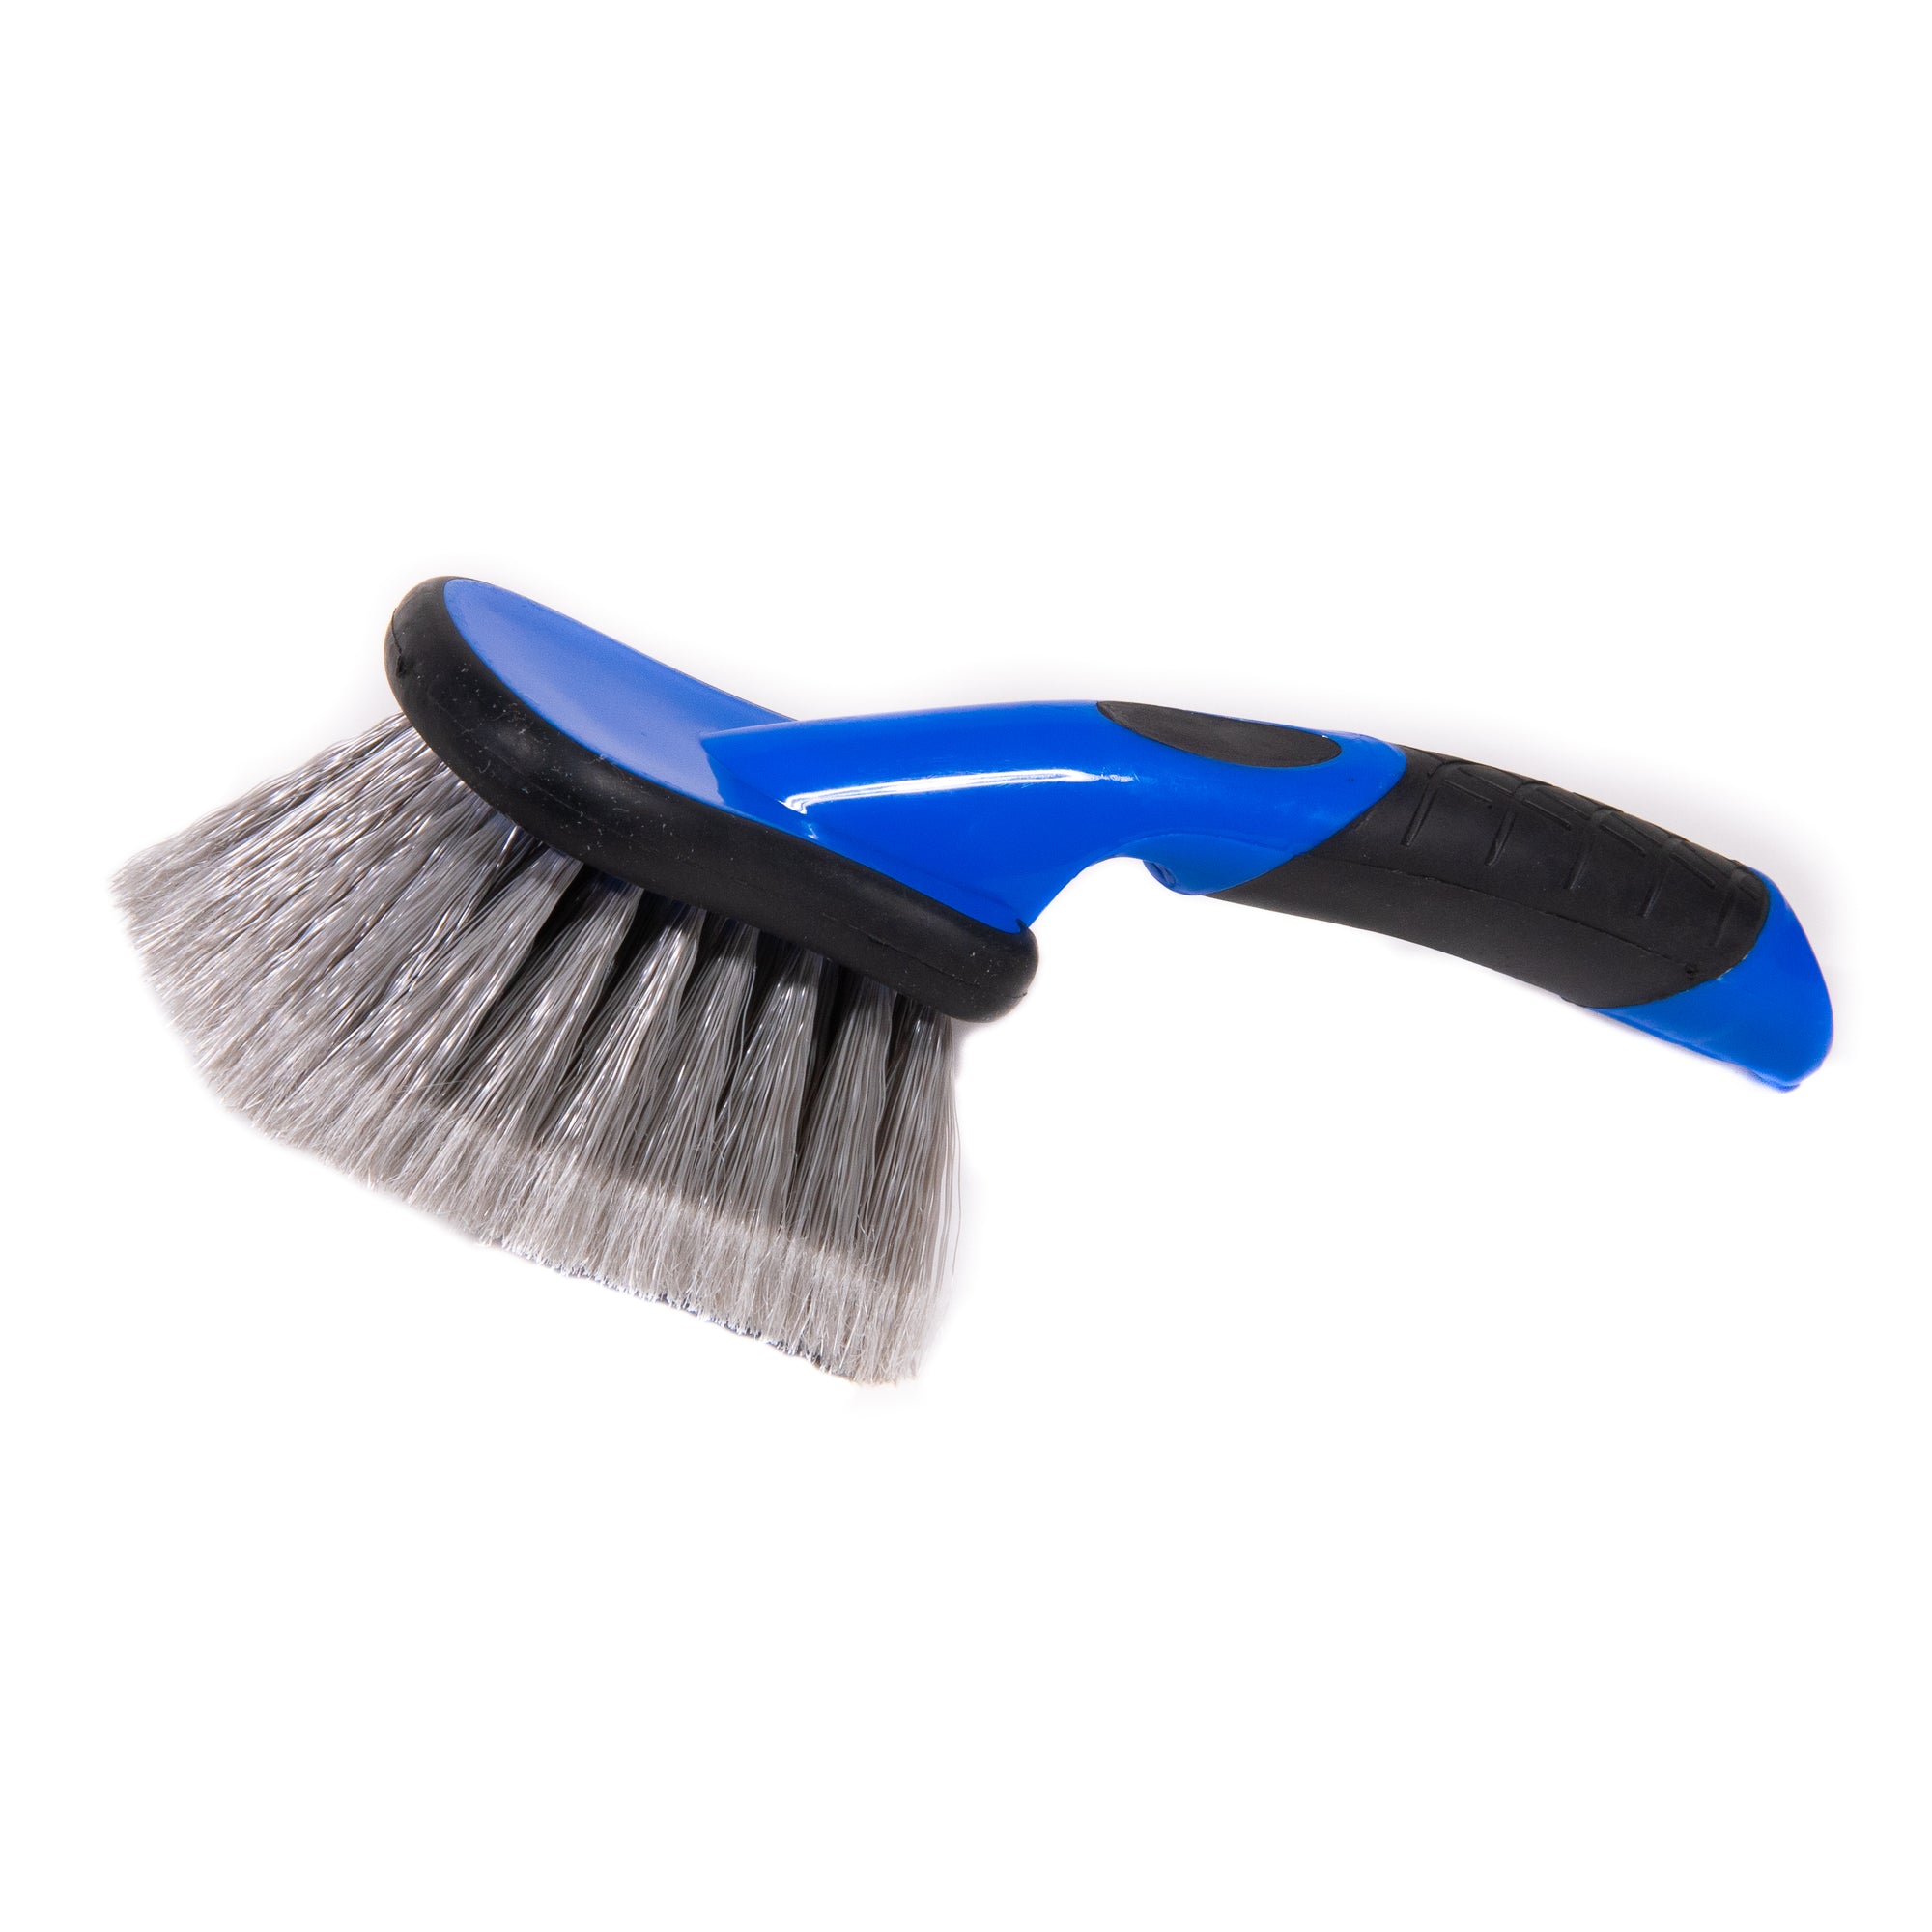 AOCISKA Car Interior Detailing Brush,Soft Bristle Cleaning Brush Car  Detailing Brush Dusting Brush,Car Interior Cleaning Tool,Au